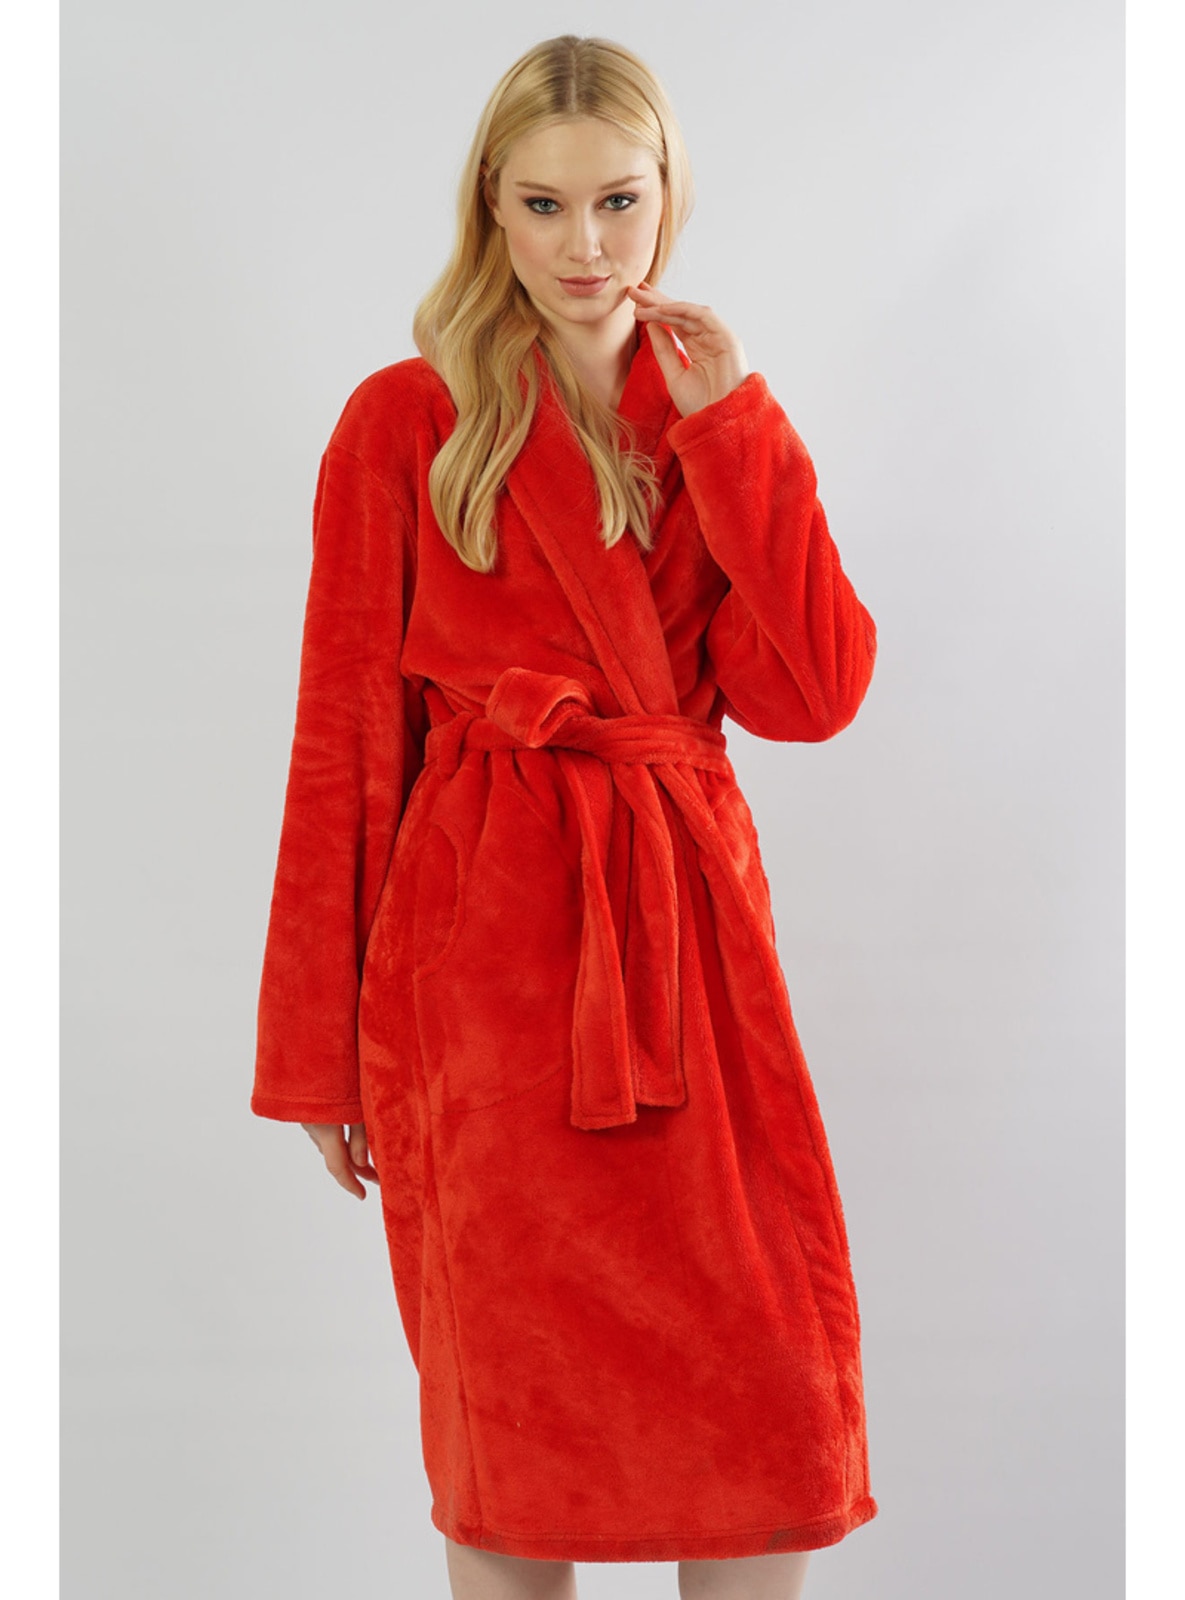 Red - Morning Robe